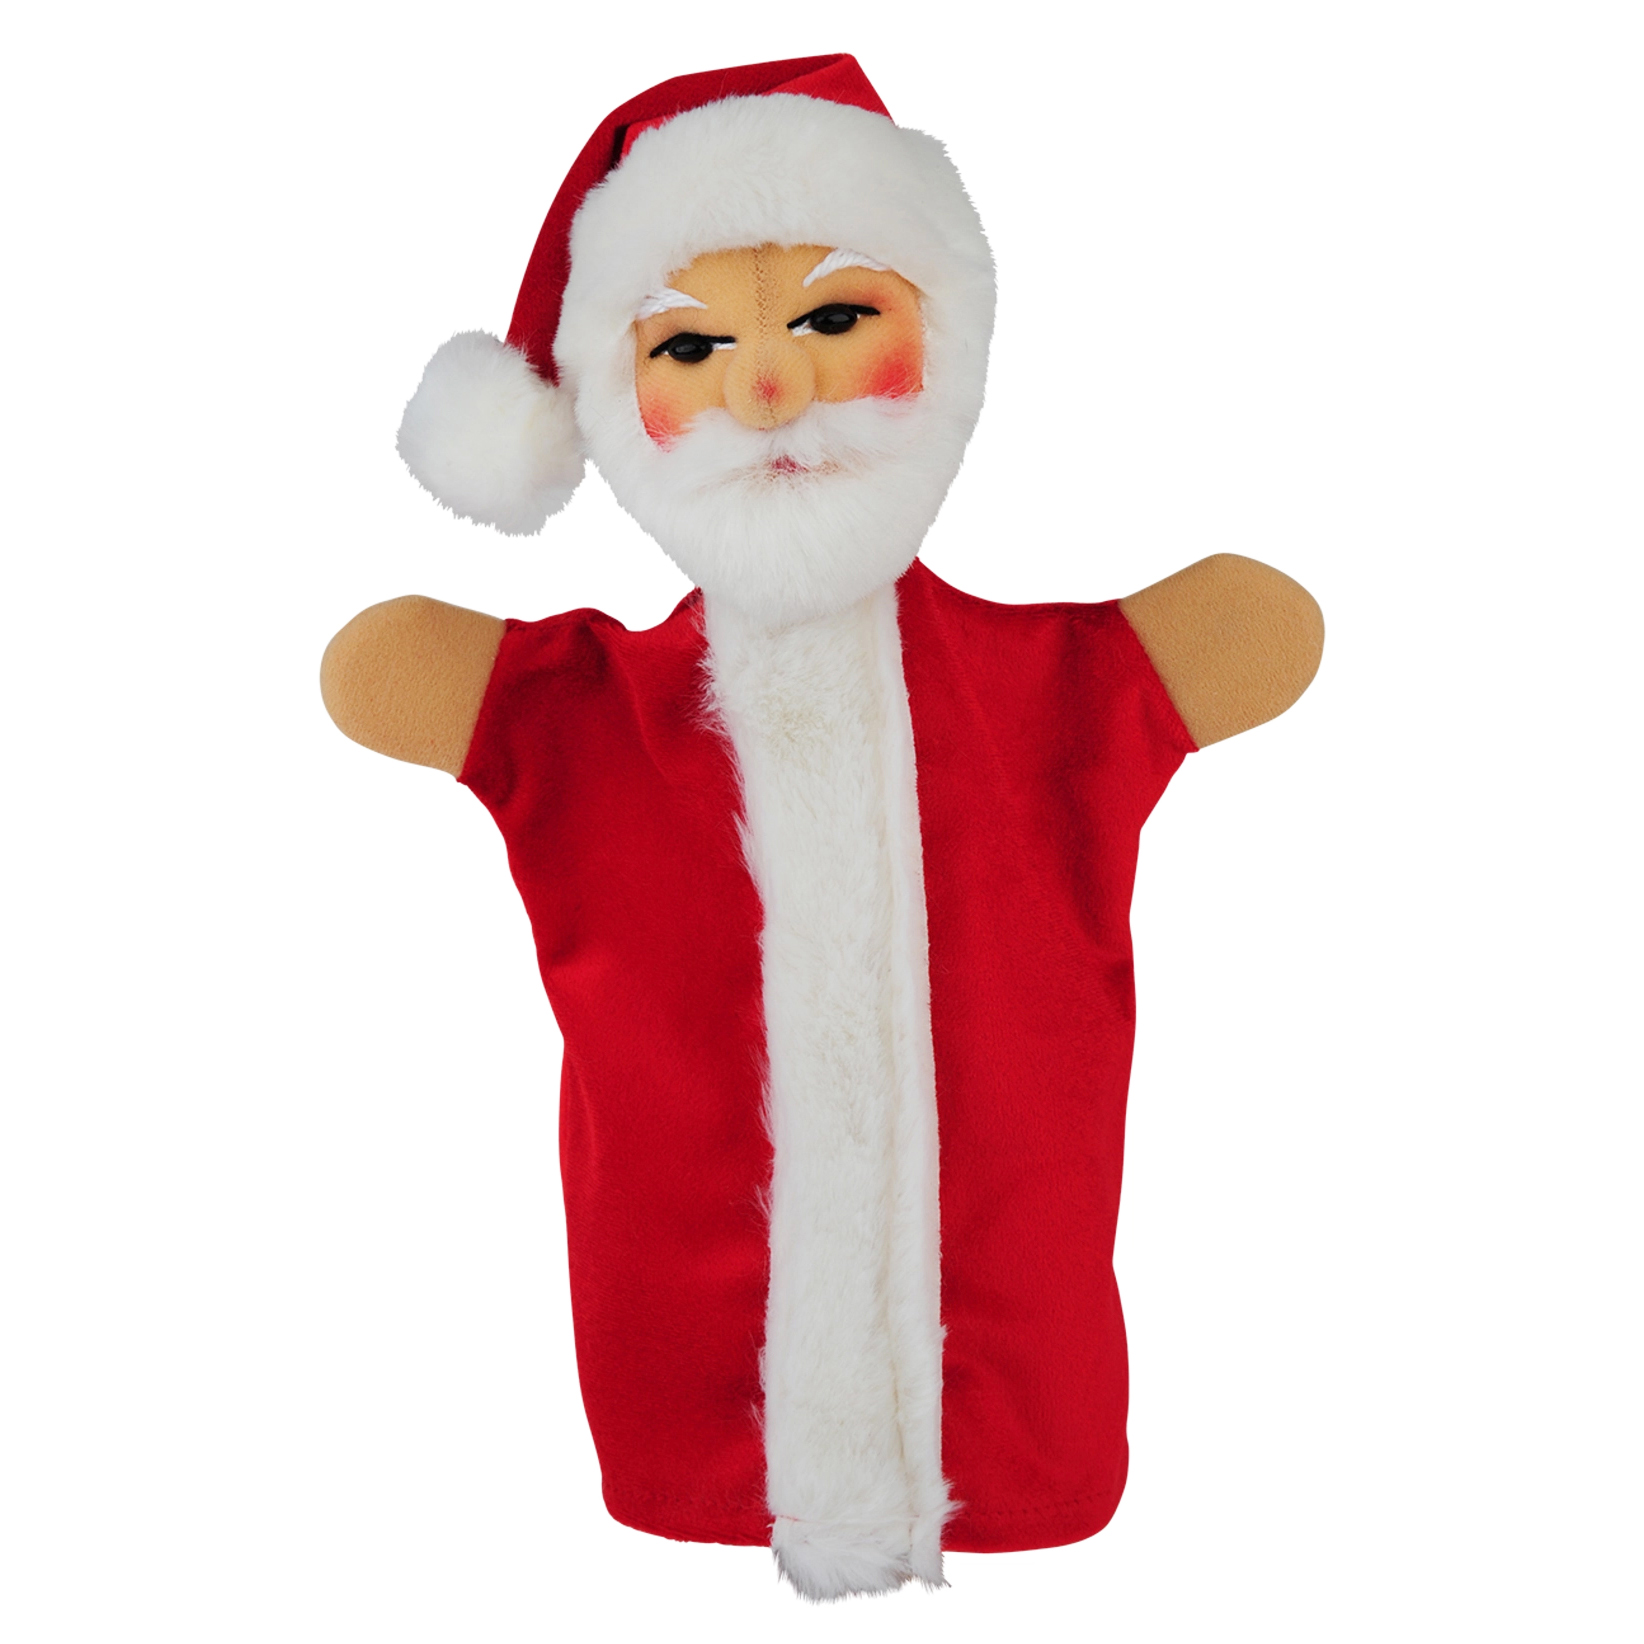 Hand puppet Santa Claus - KERSA classic